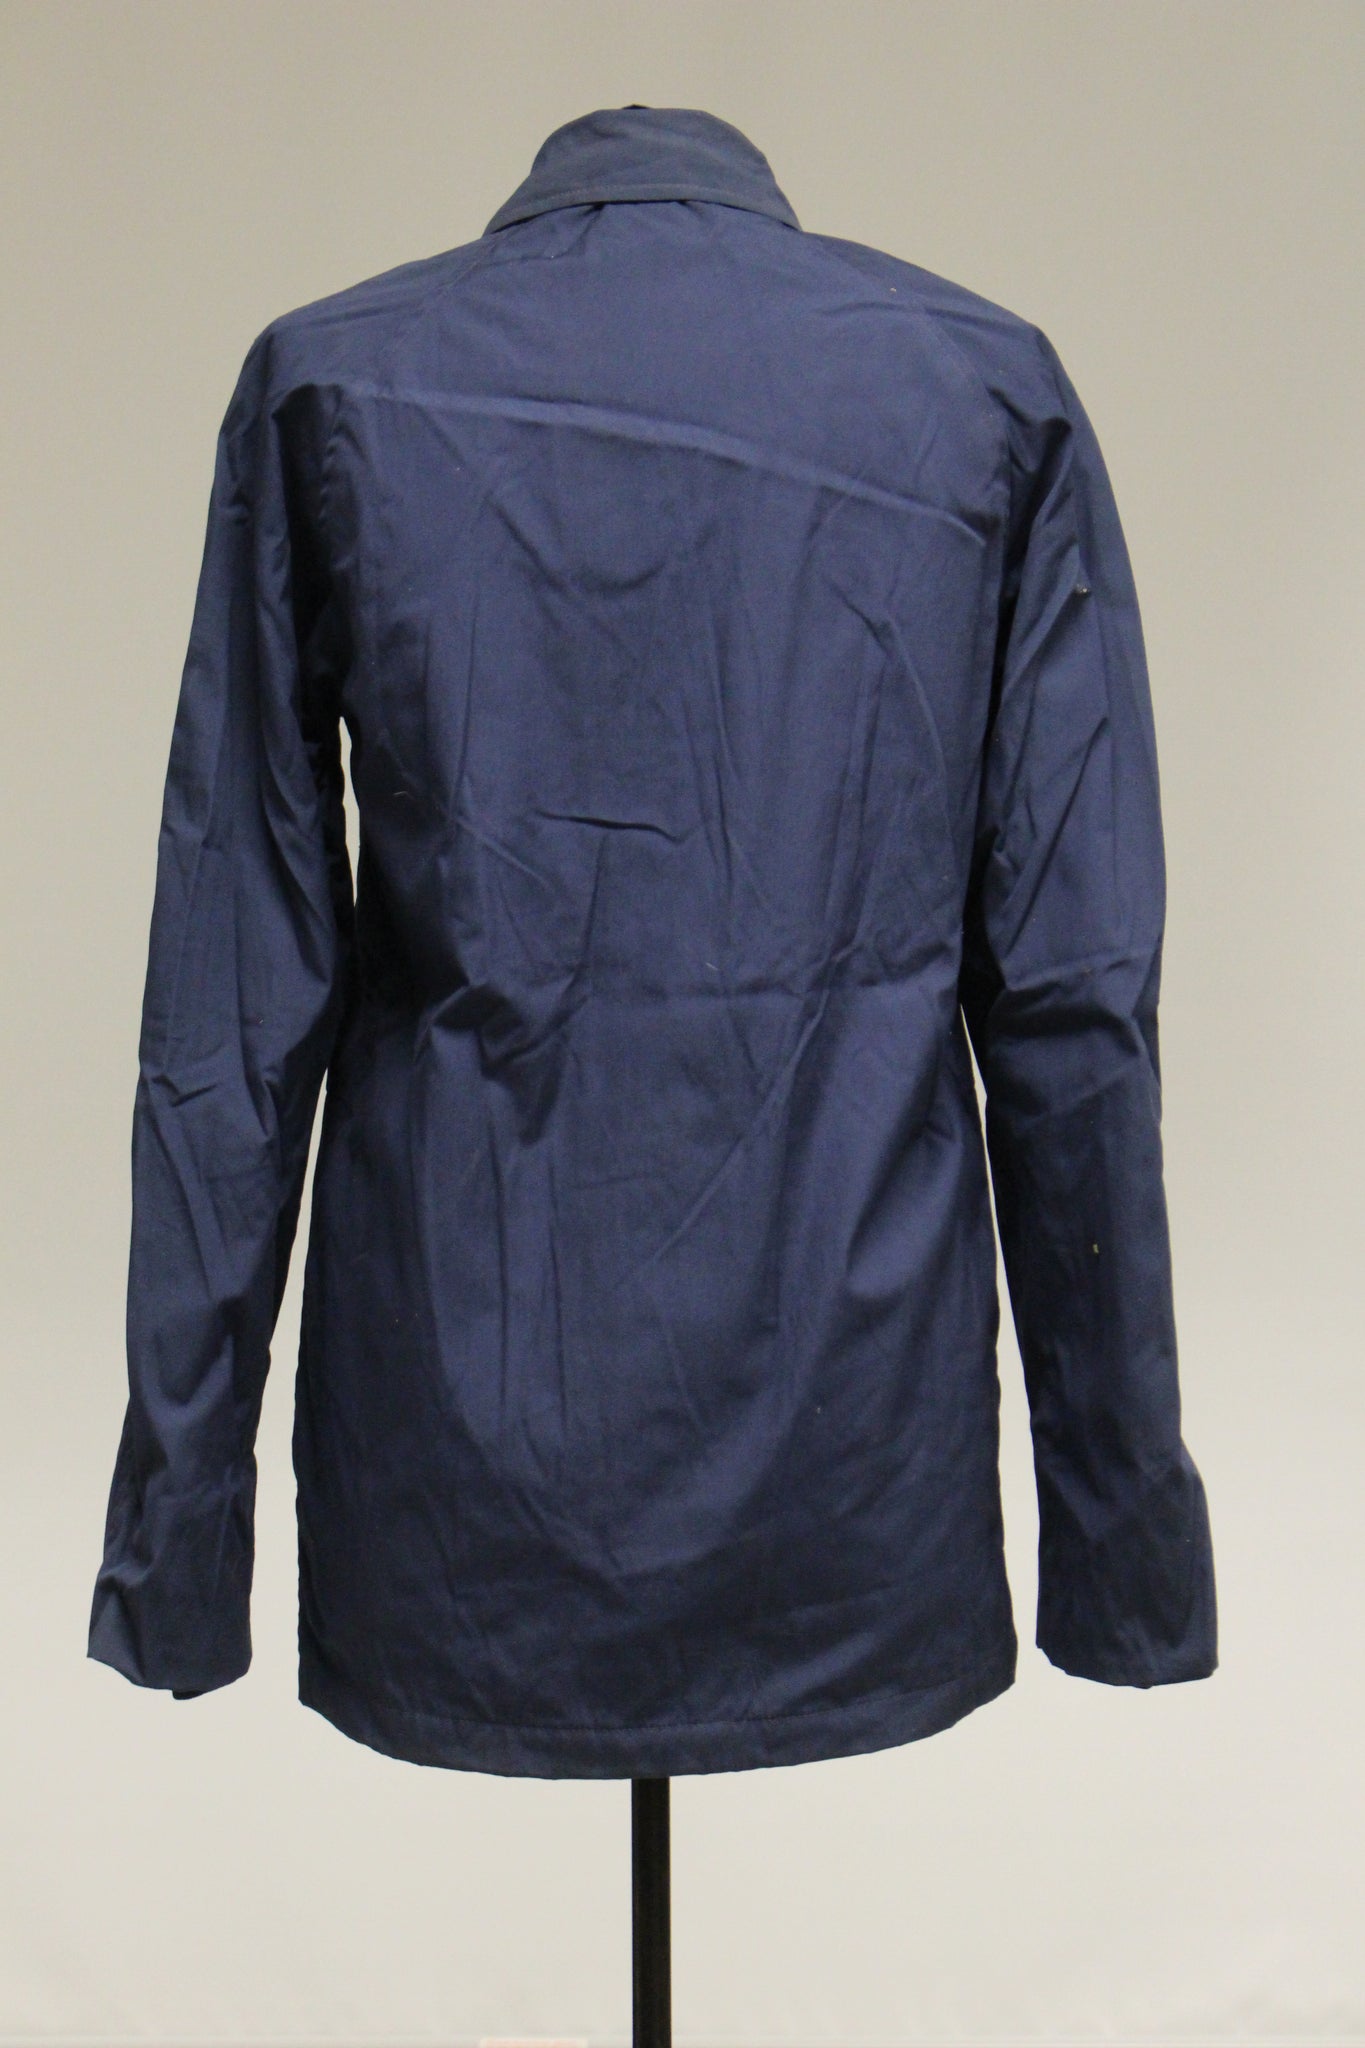 Improbes Men's Military Jacket, Utility Jacket, Black, M : :  Clothing, Shoes & Accessories